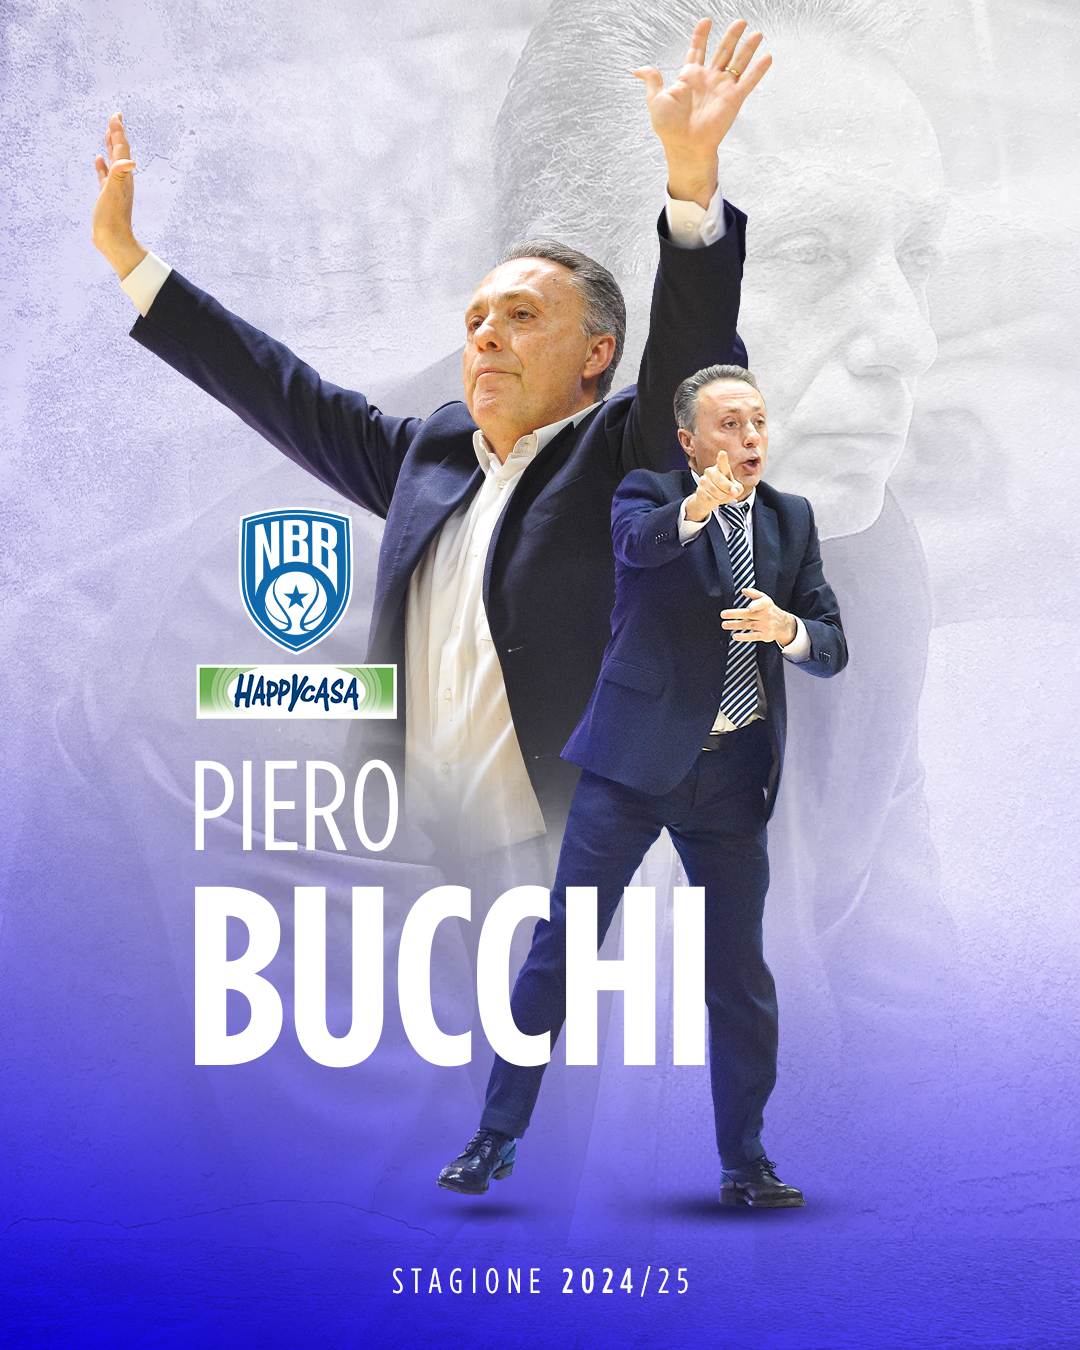 PIERO BUCCHI IS BACK